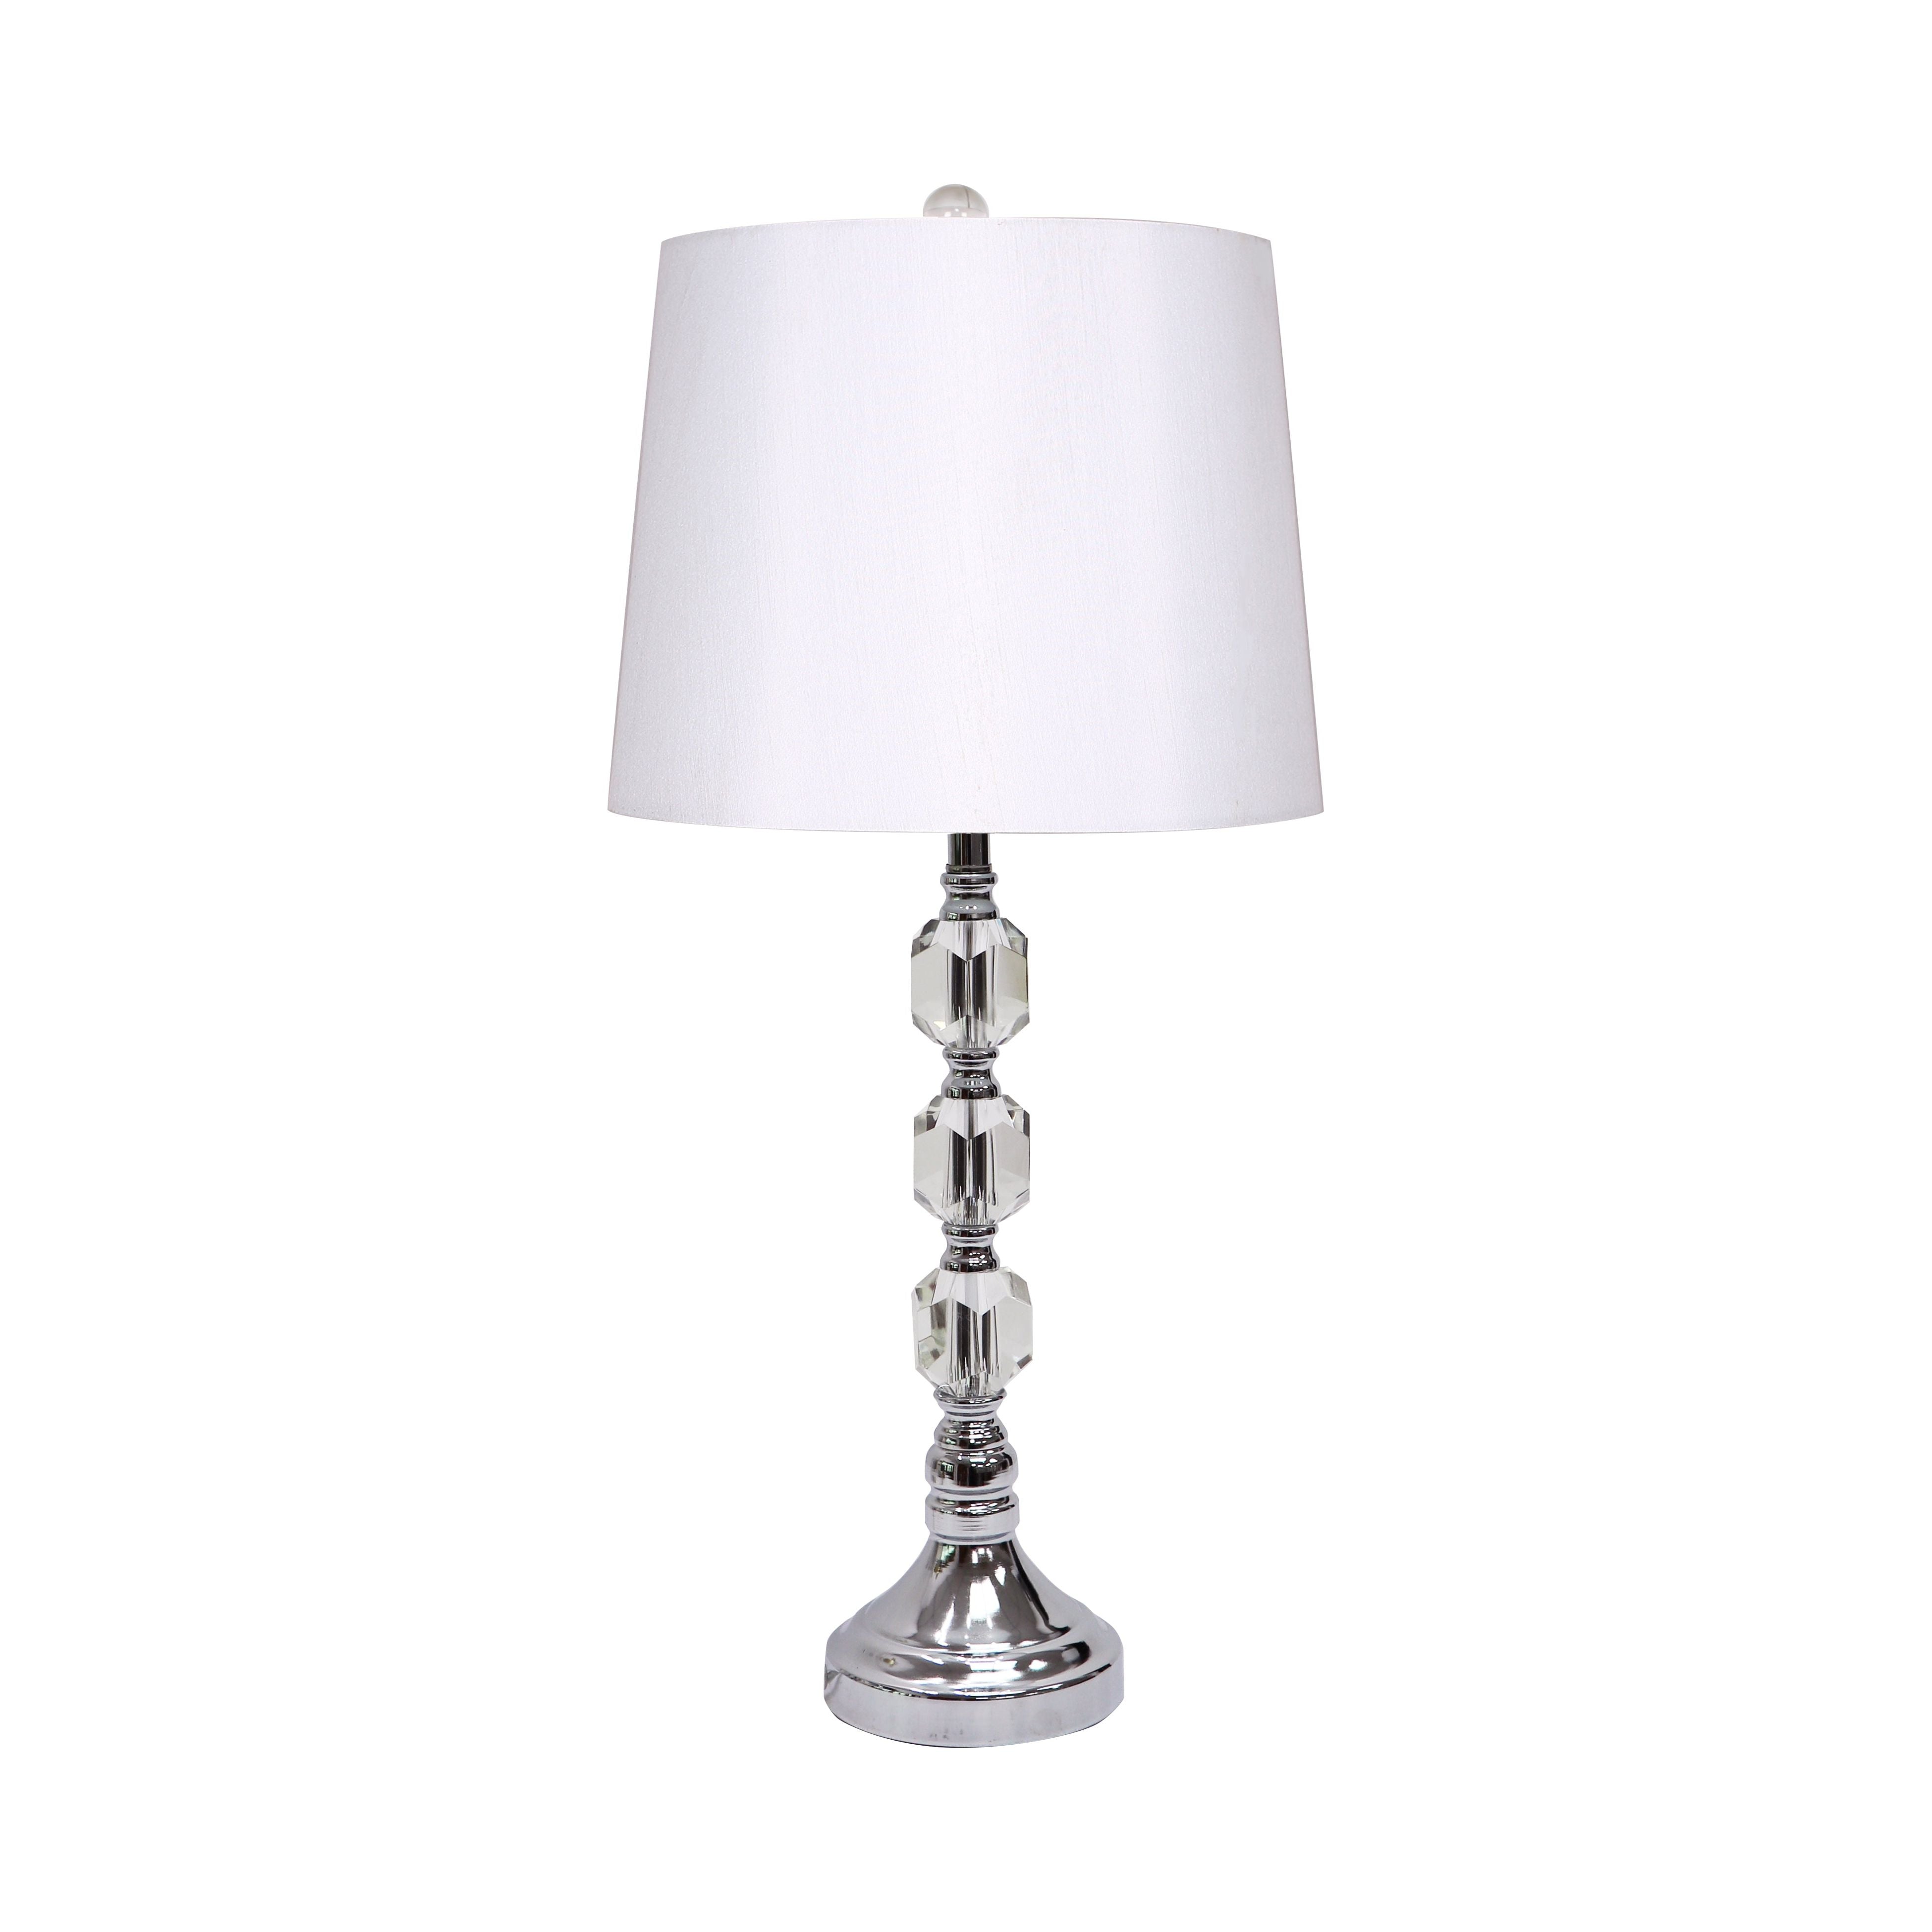 Essex 27" Table Lamp